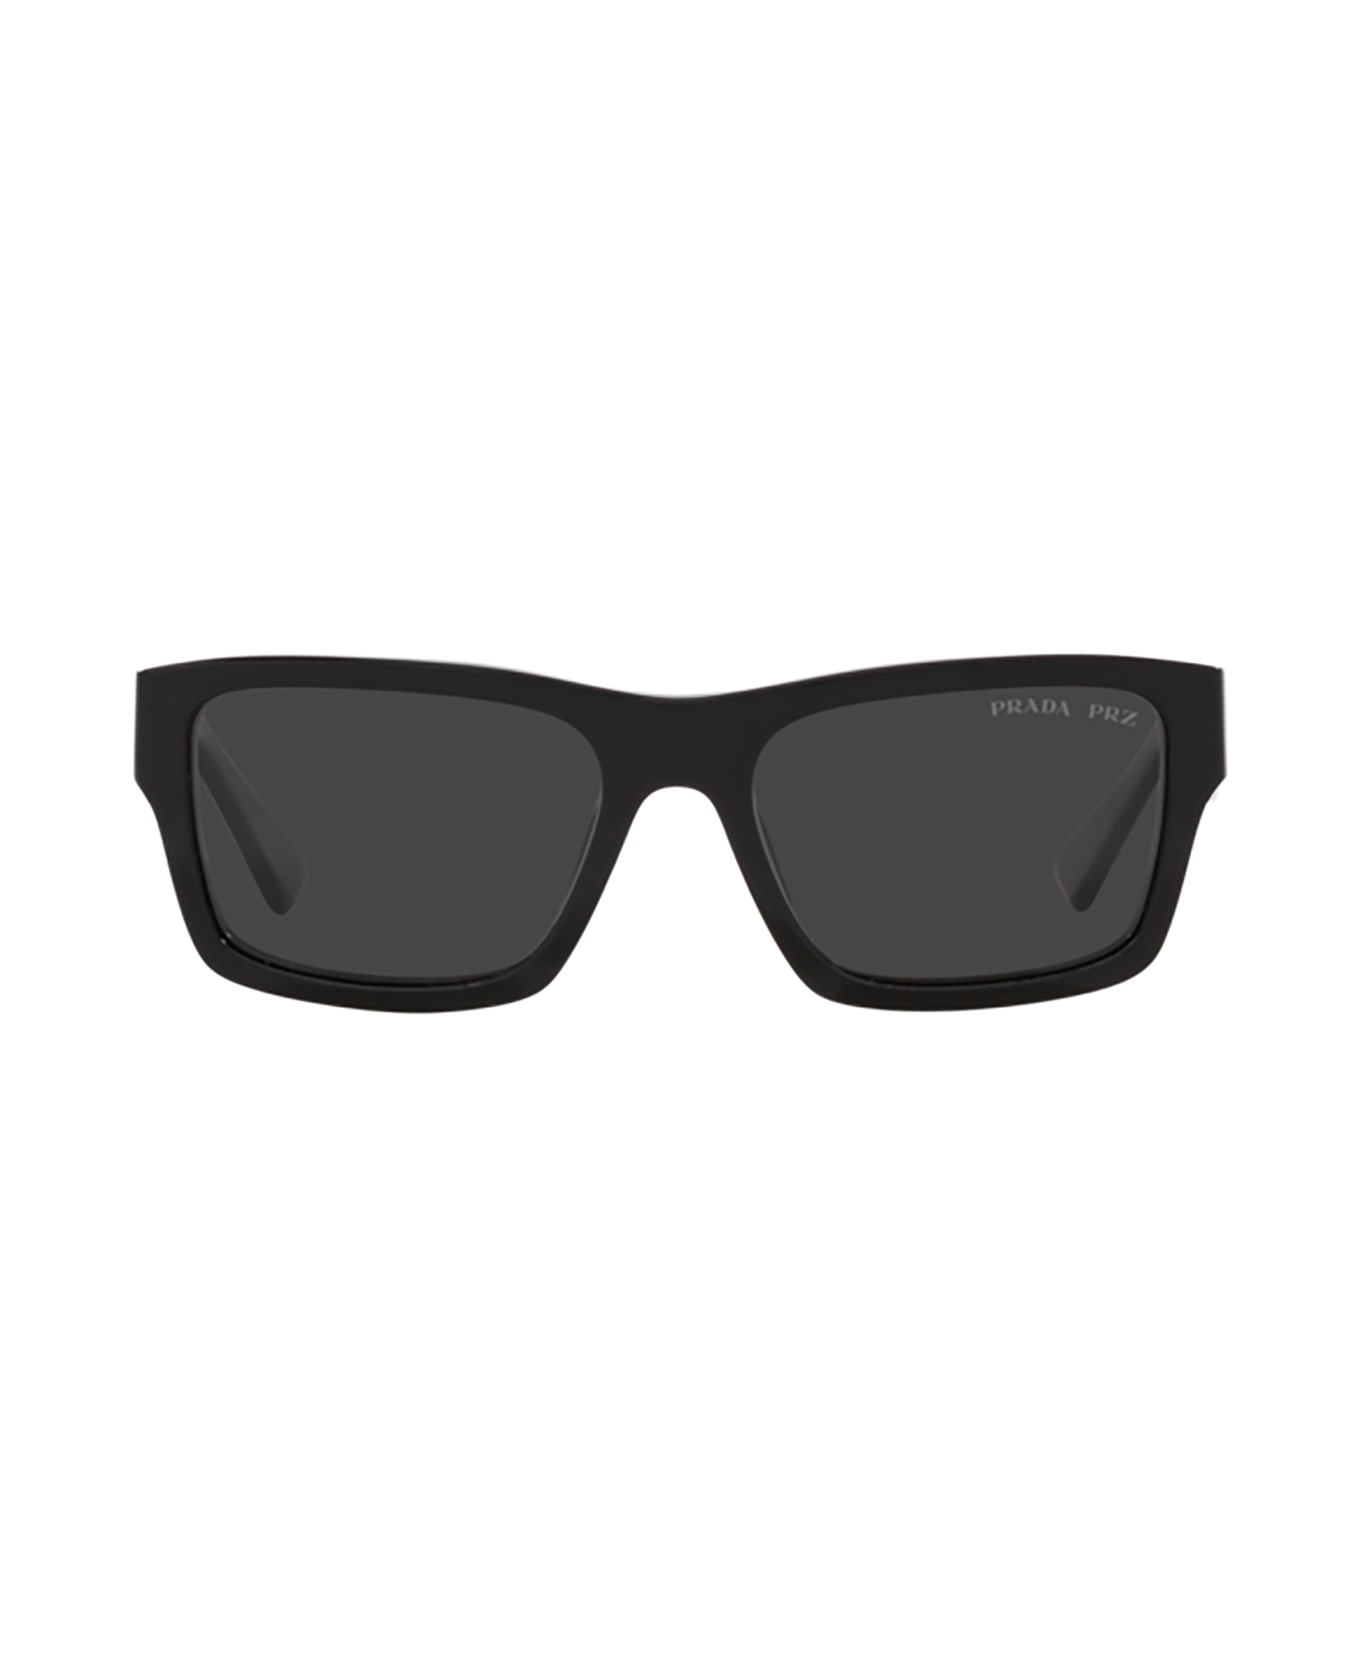 Prada Eyewear Pr 25zs Black Sunglasses - Black